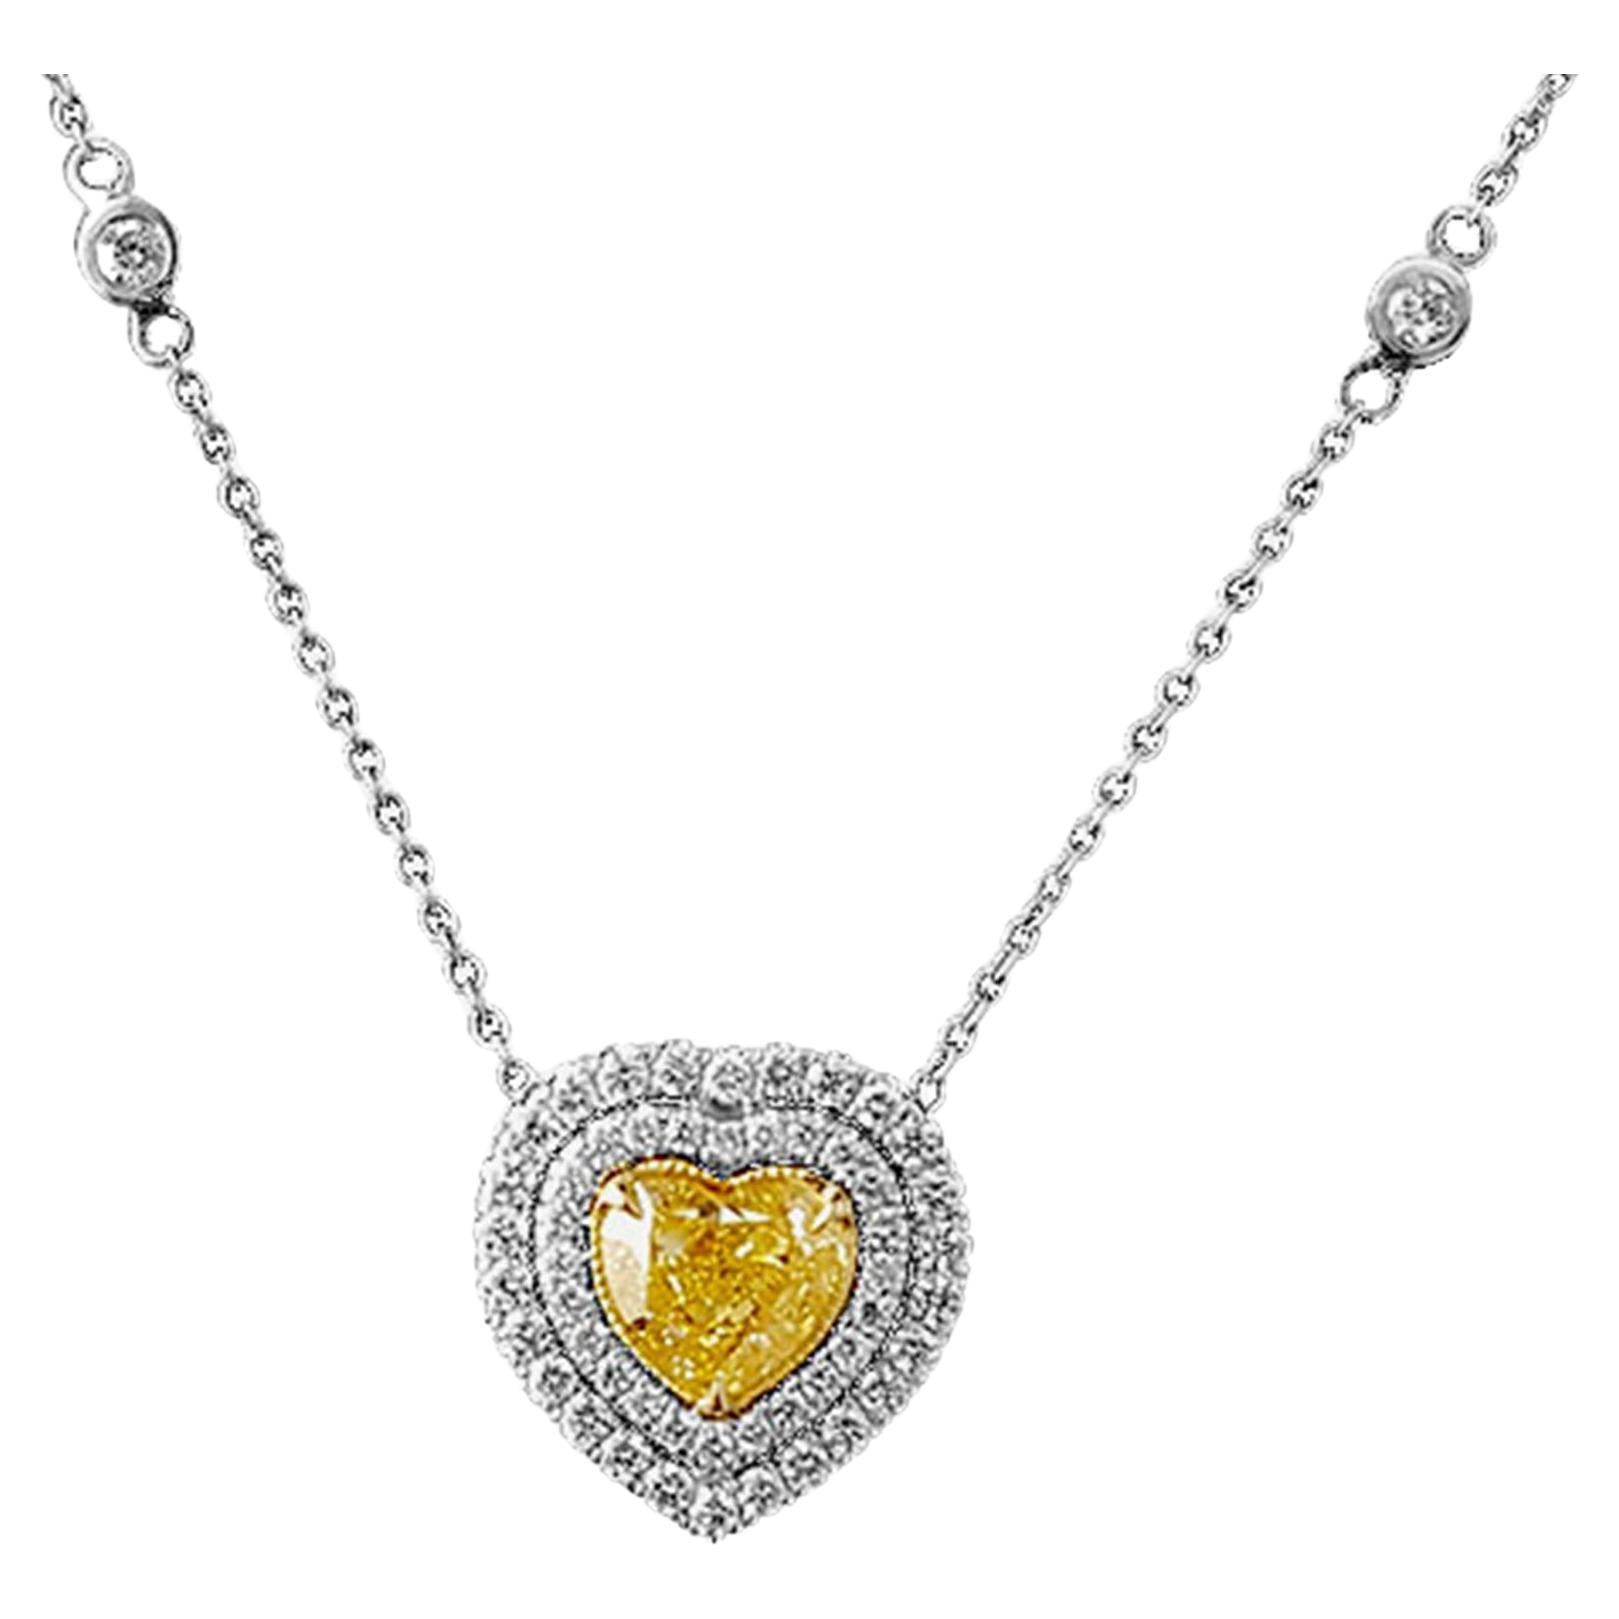 1.26 Carat Heart Cut, Fancy Yellow Diamond Halo Pendant Necklace, 18K Gold, GIA. For Sale